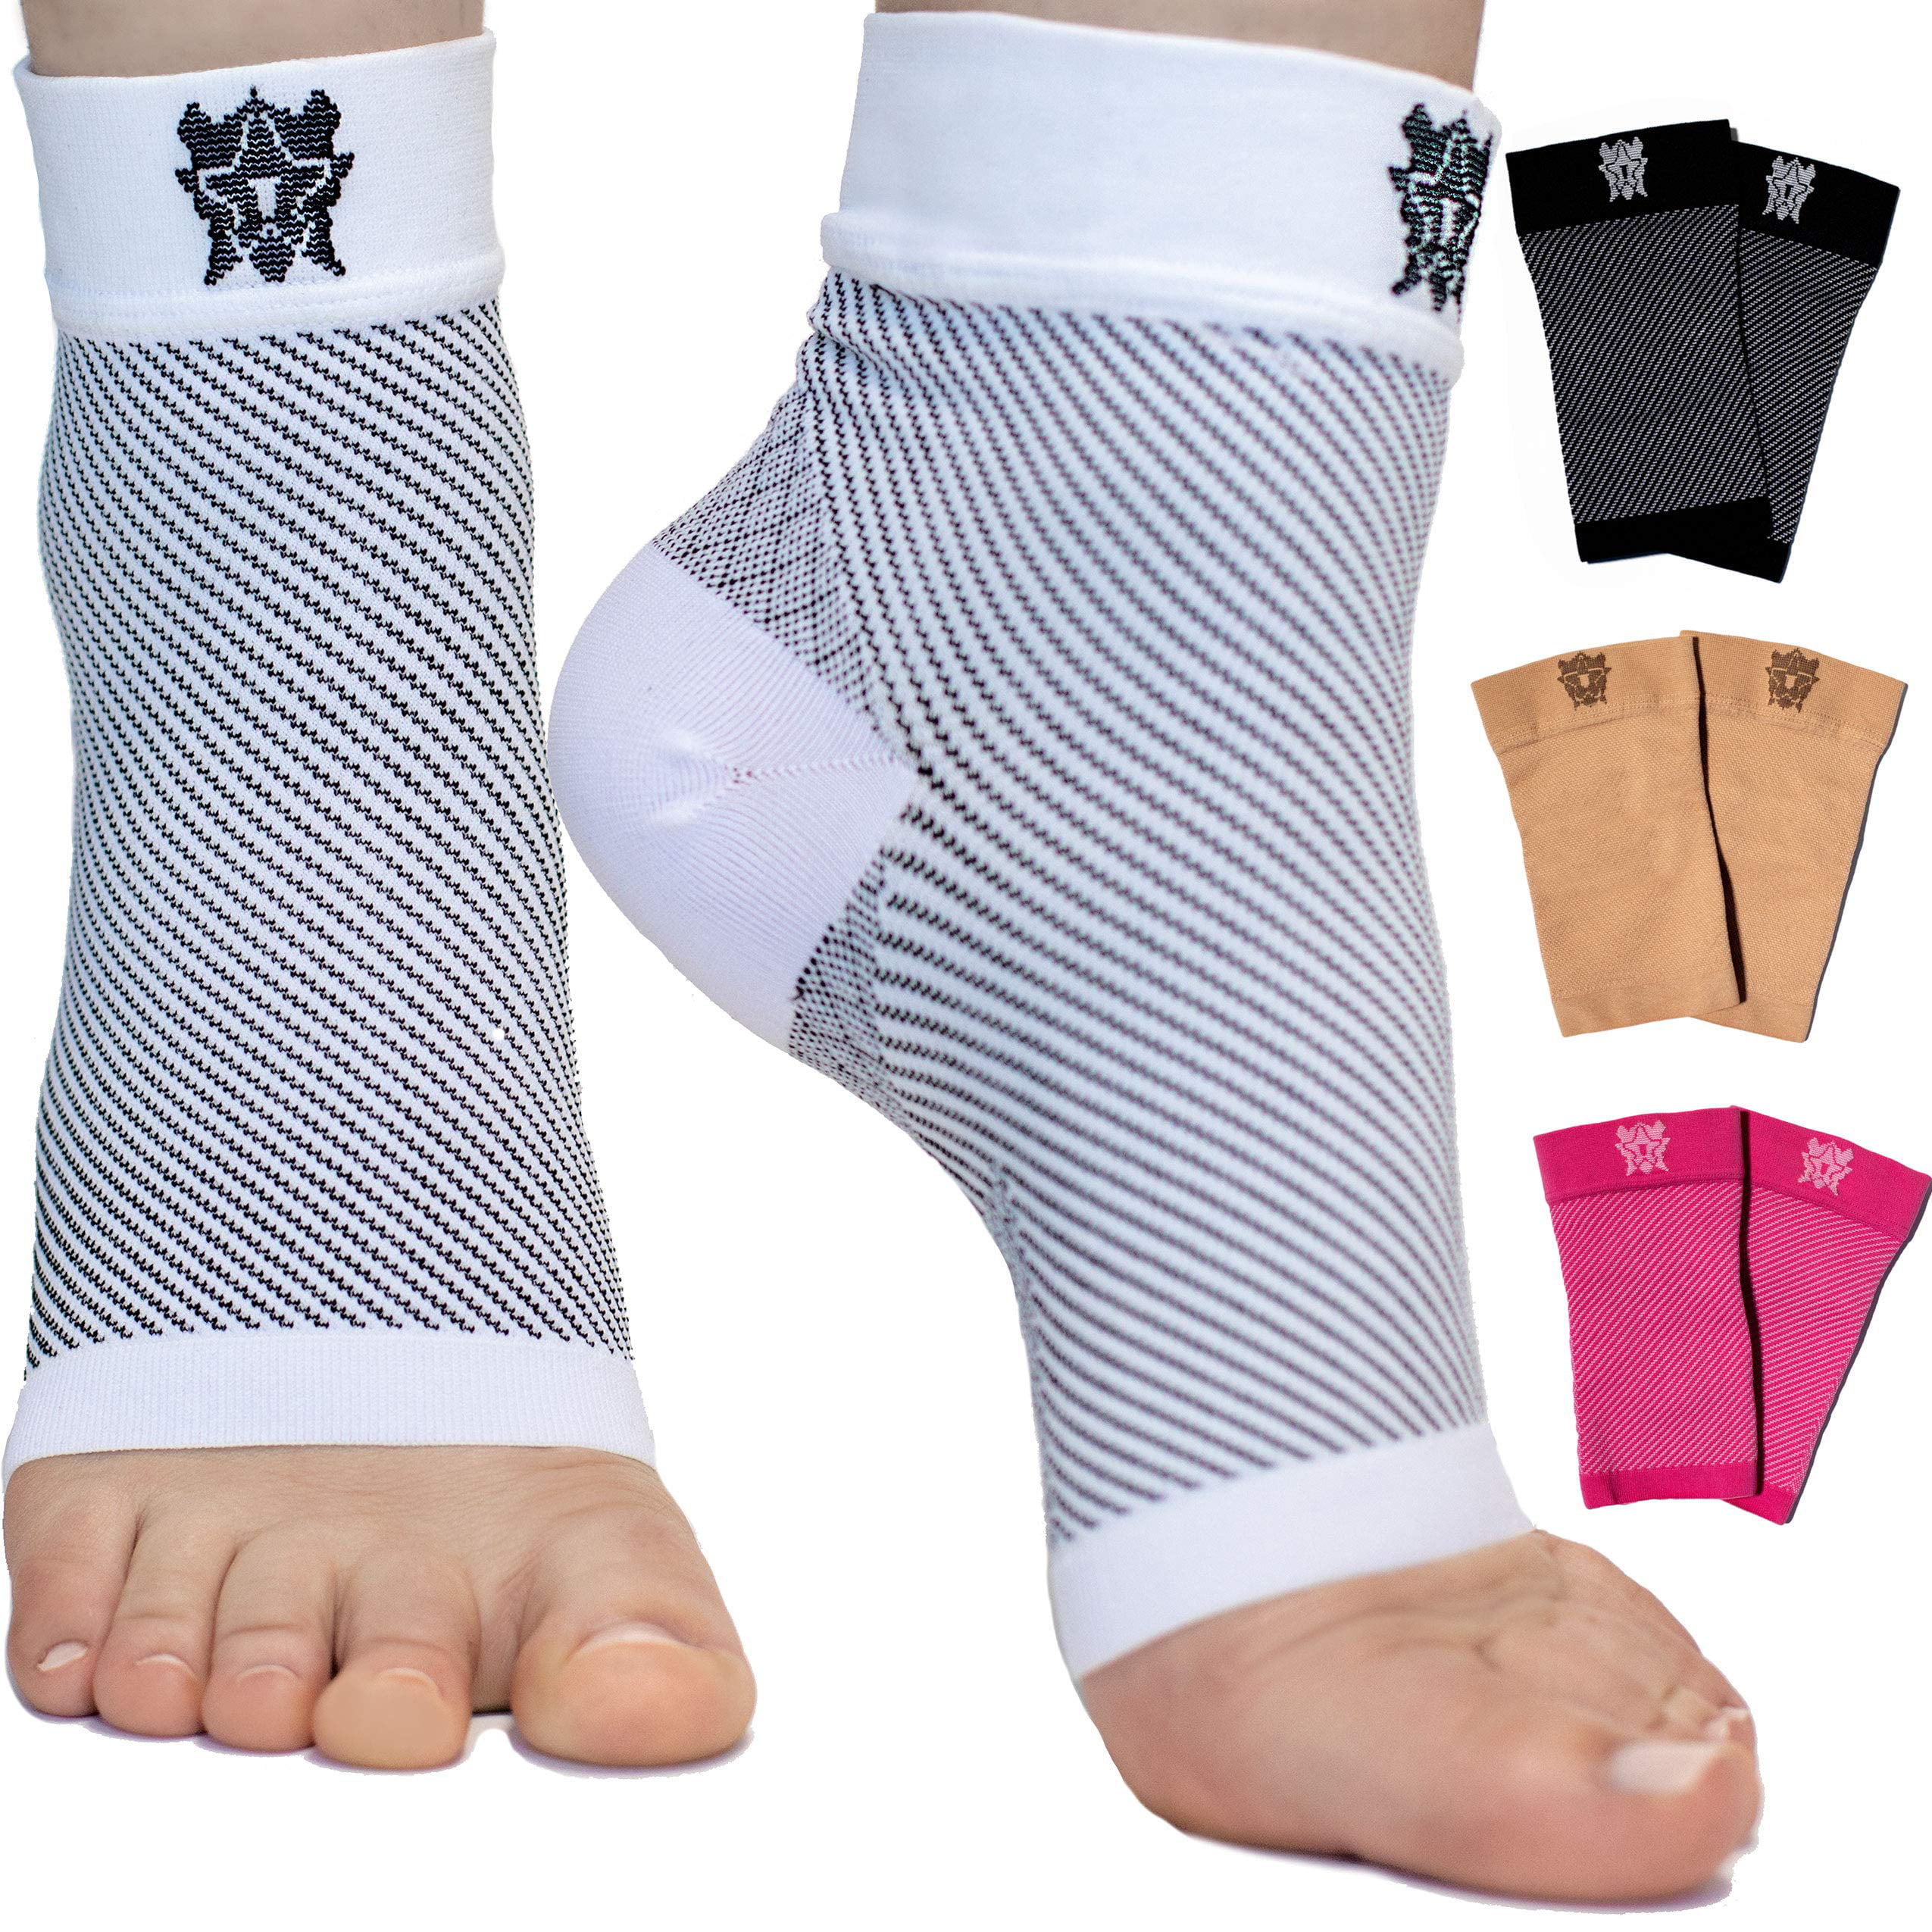 Bitly Plantar Fasciitis Socks, Breathable AllDay Wear Compression Foot